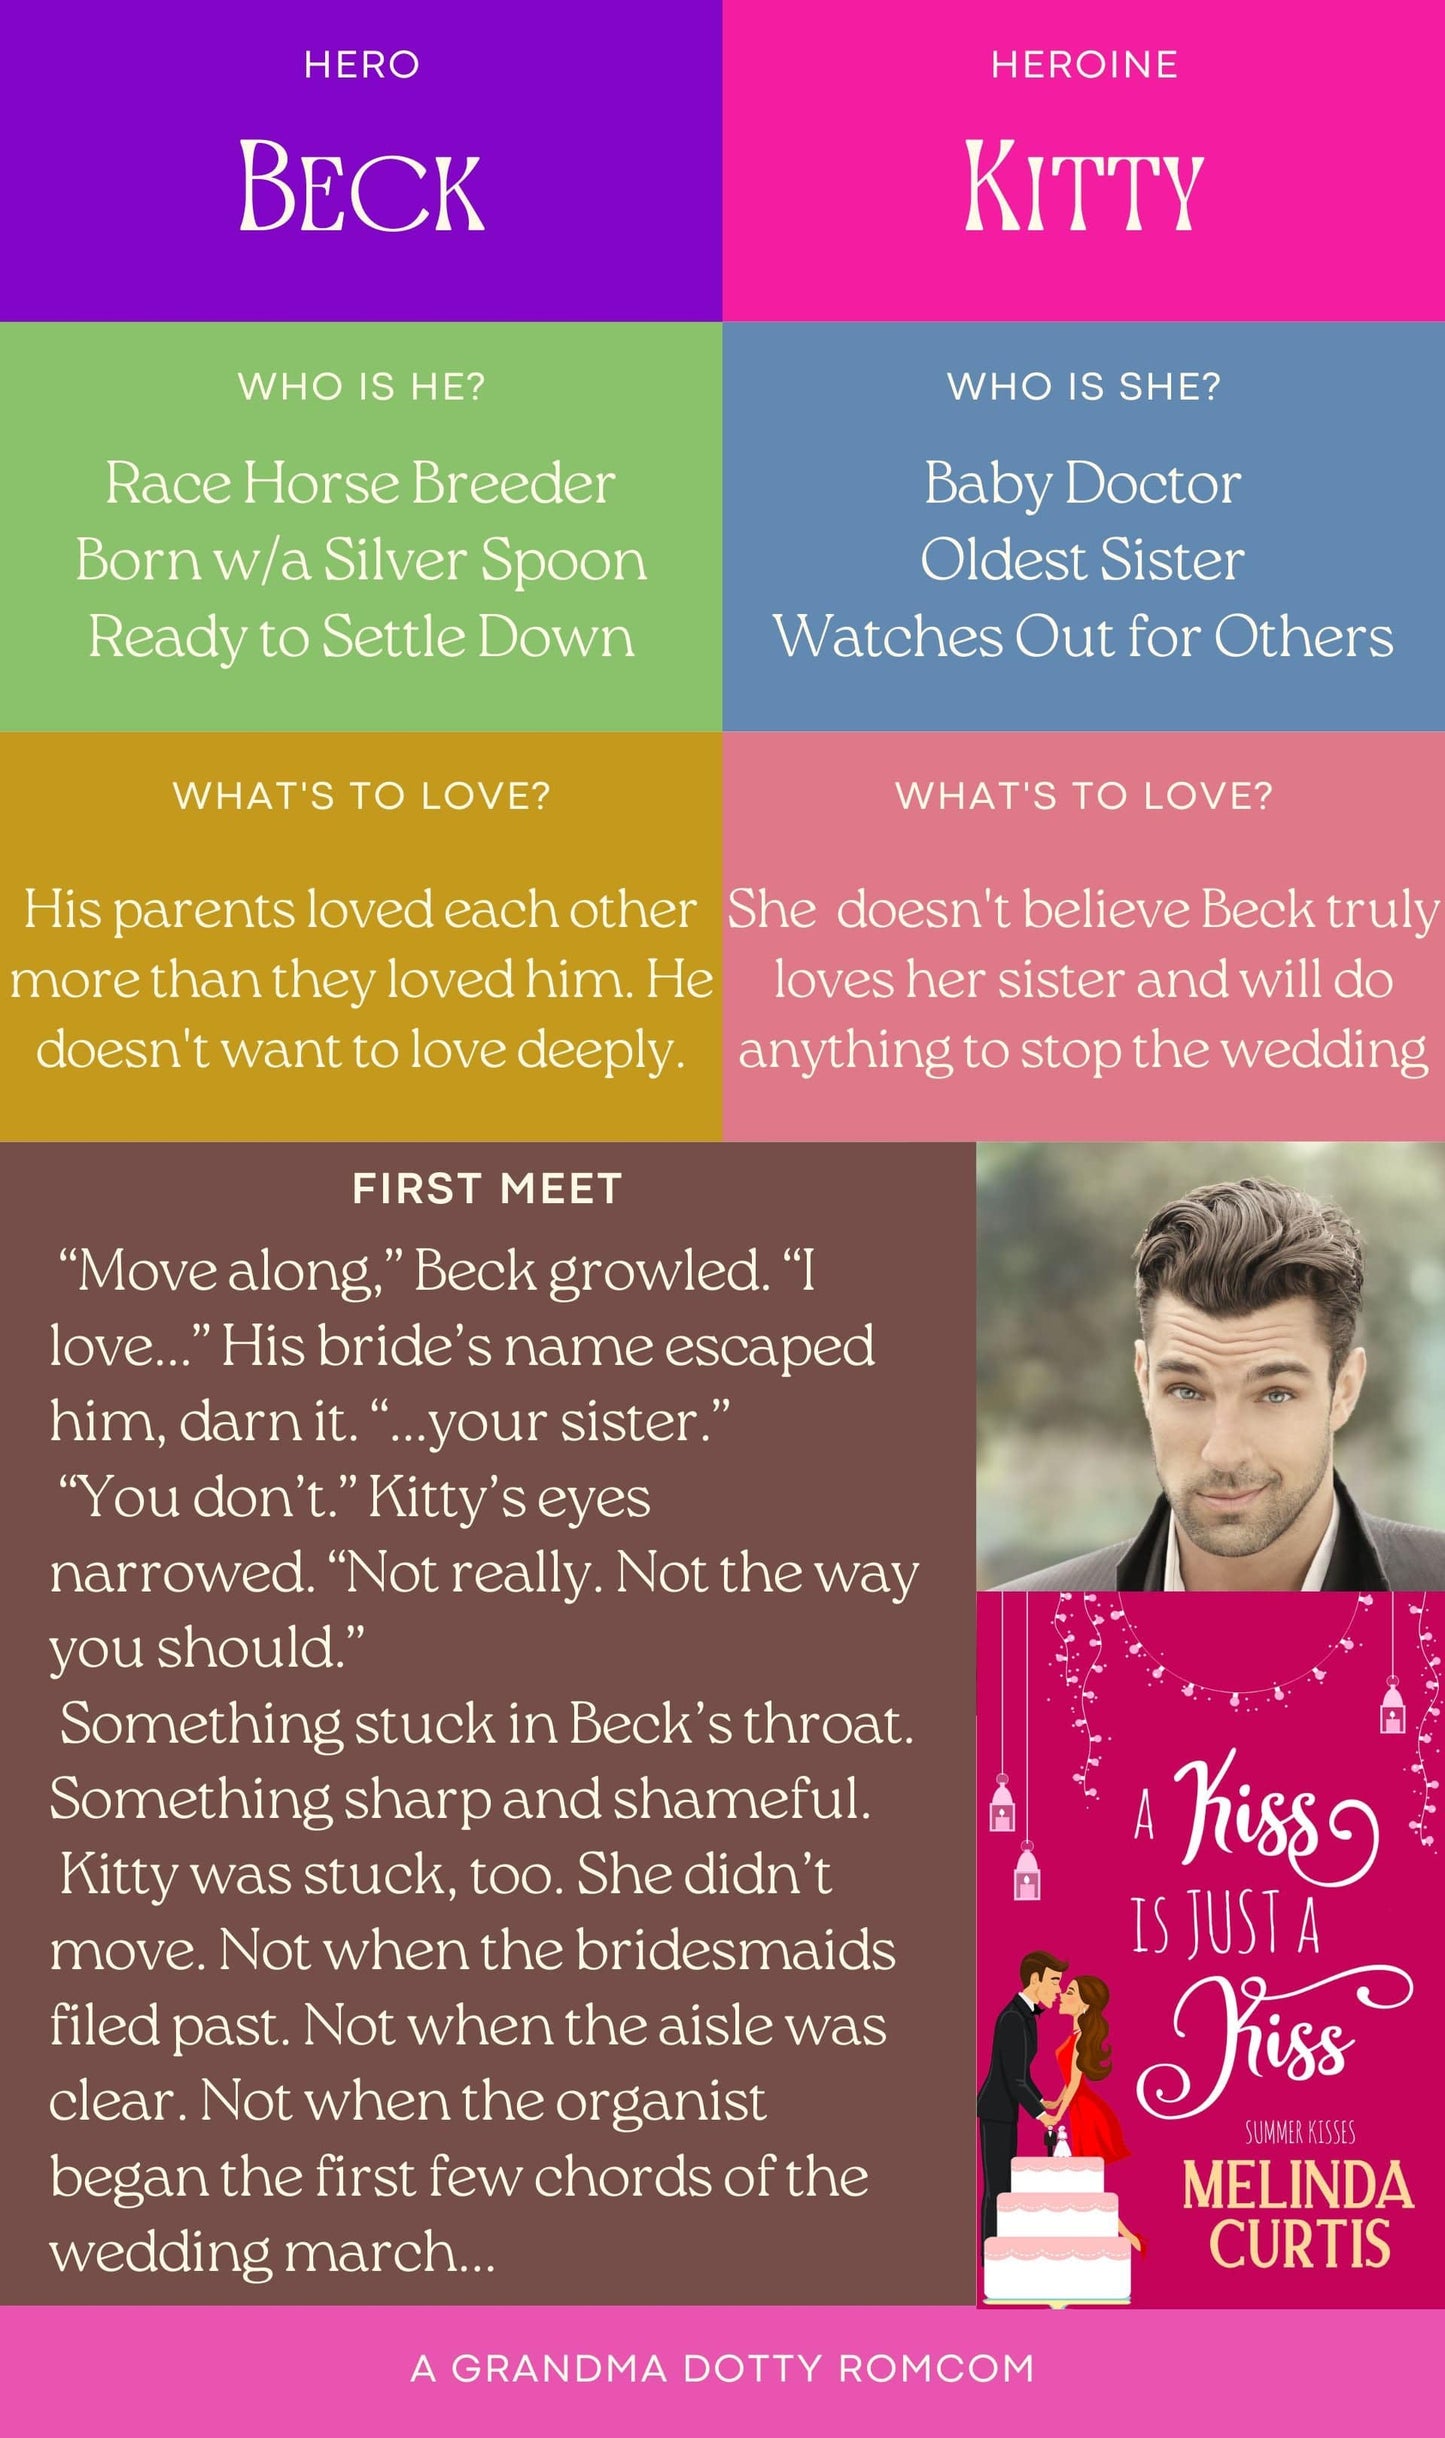 Summer Kisses Sweet Romcom 5-eBook Digital Set (Books 1-5)